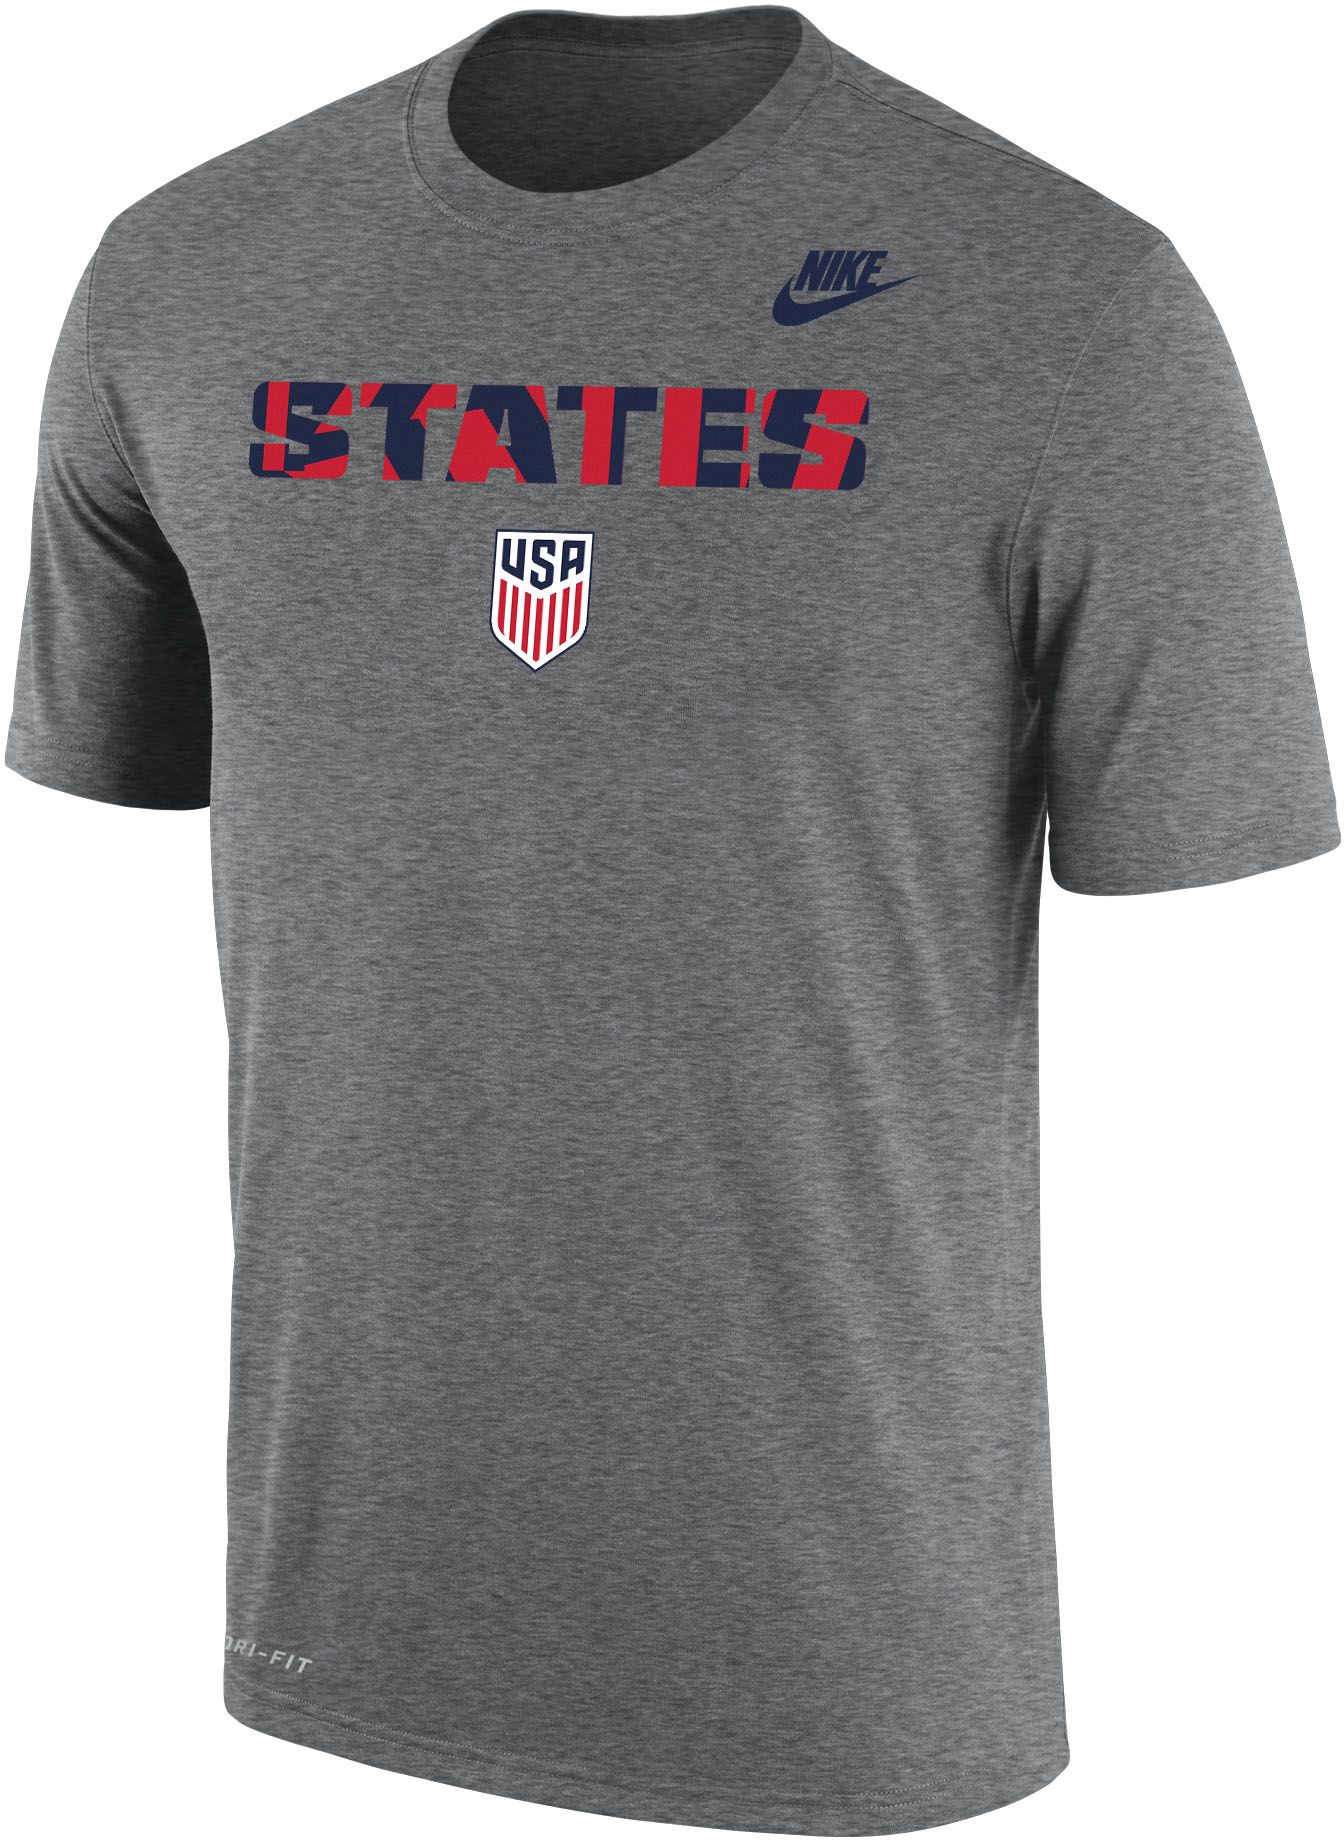 Nike Men's Tampa Bay Rays Black Cooperstown Rewind T-Shirt